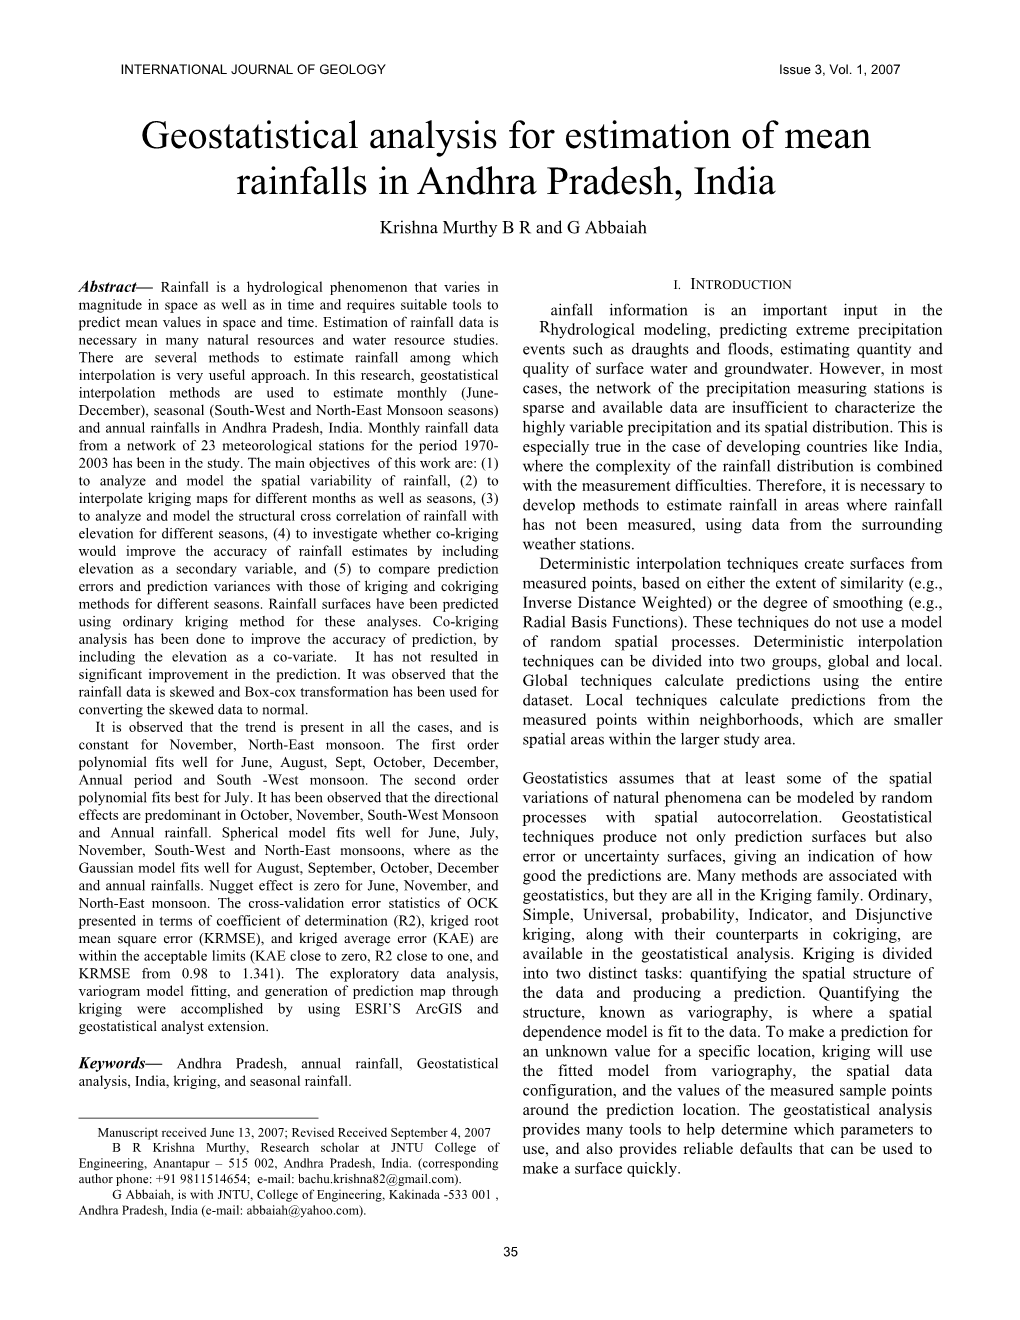 Geostatistical Analysis for Estimation of Mean Rainfalls in Andhra Pradesh, India Krishna Murthy B R and G Abbaiah